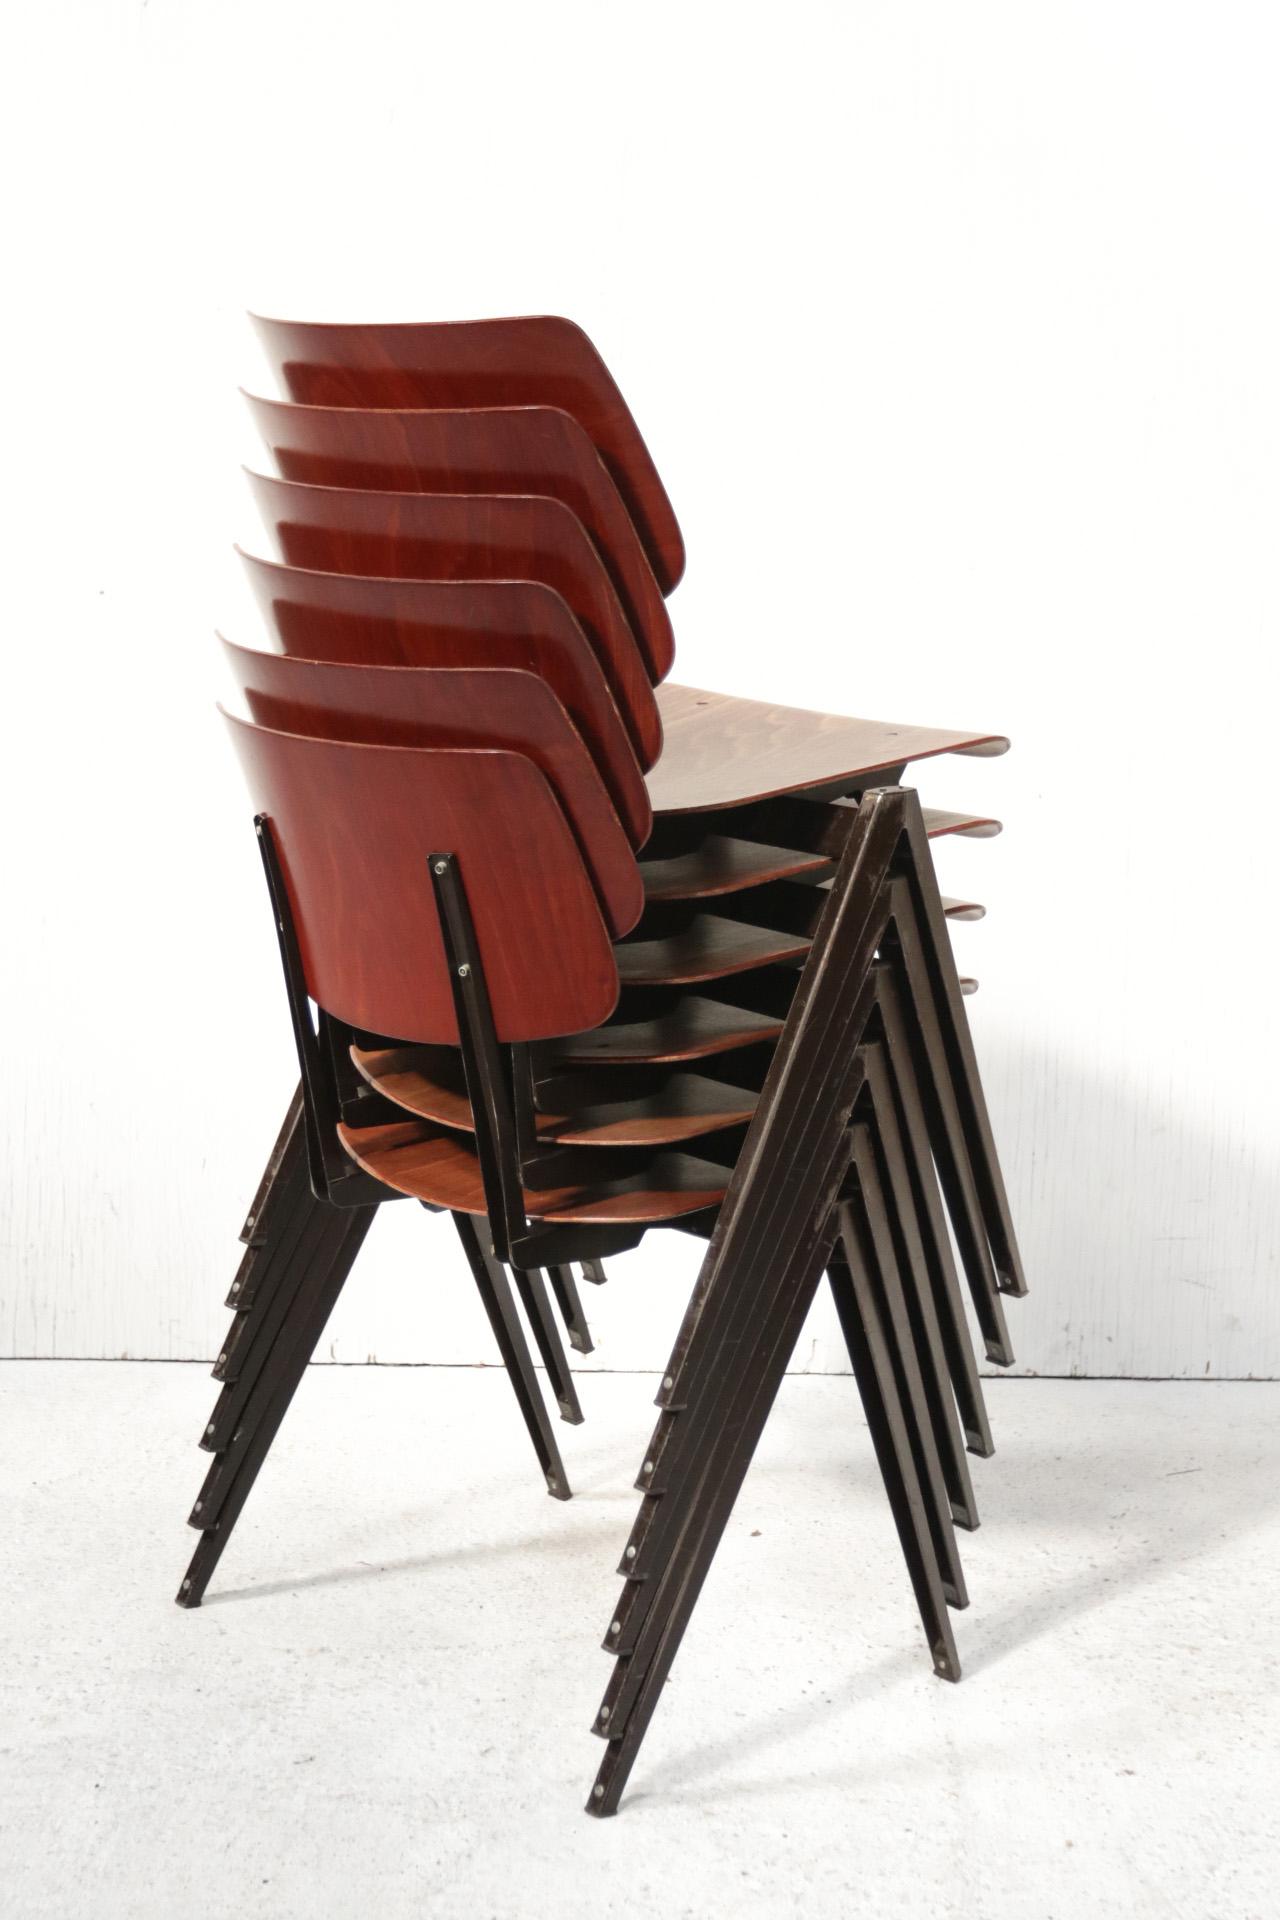 Dutch Industrial Design Prouve Style School Chairs S21 Compas Galvanitas For Sale 1